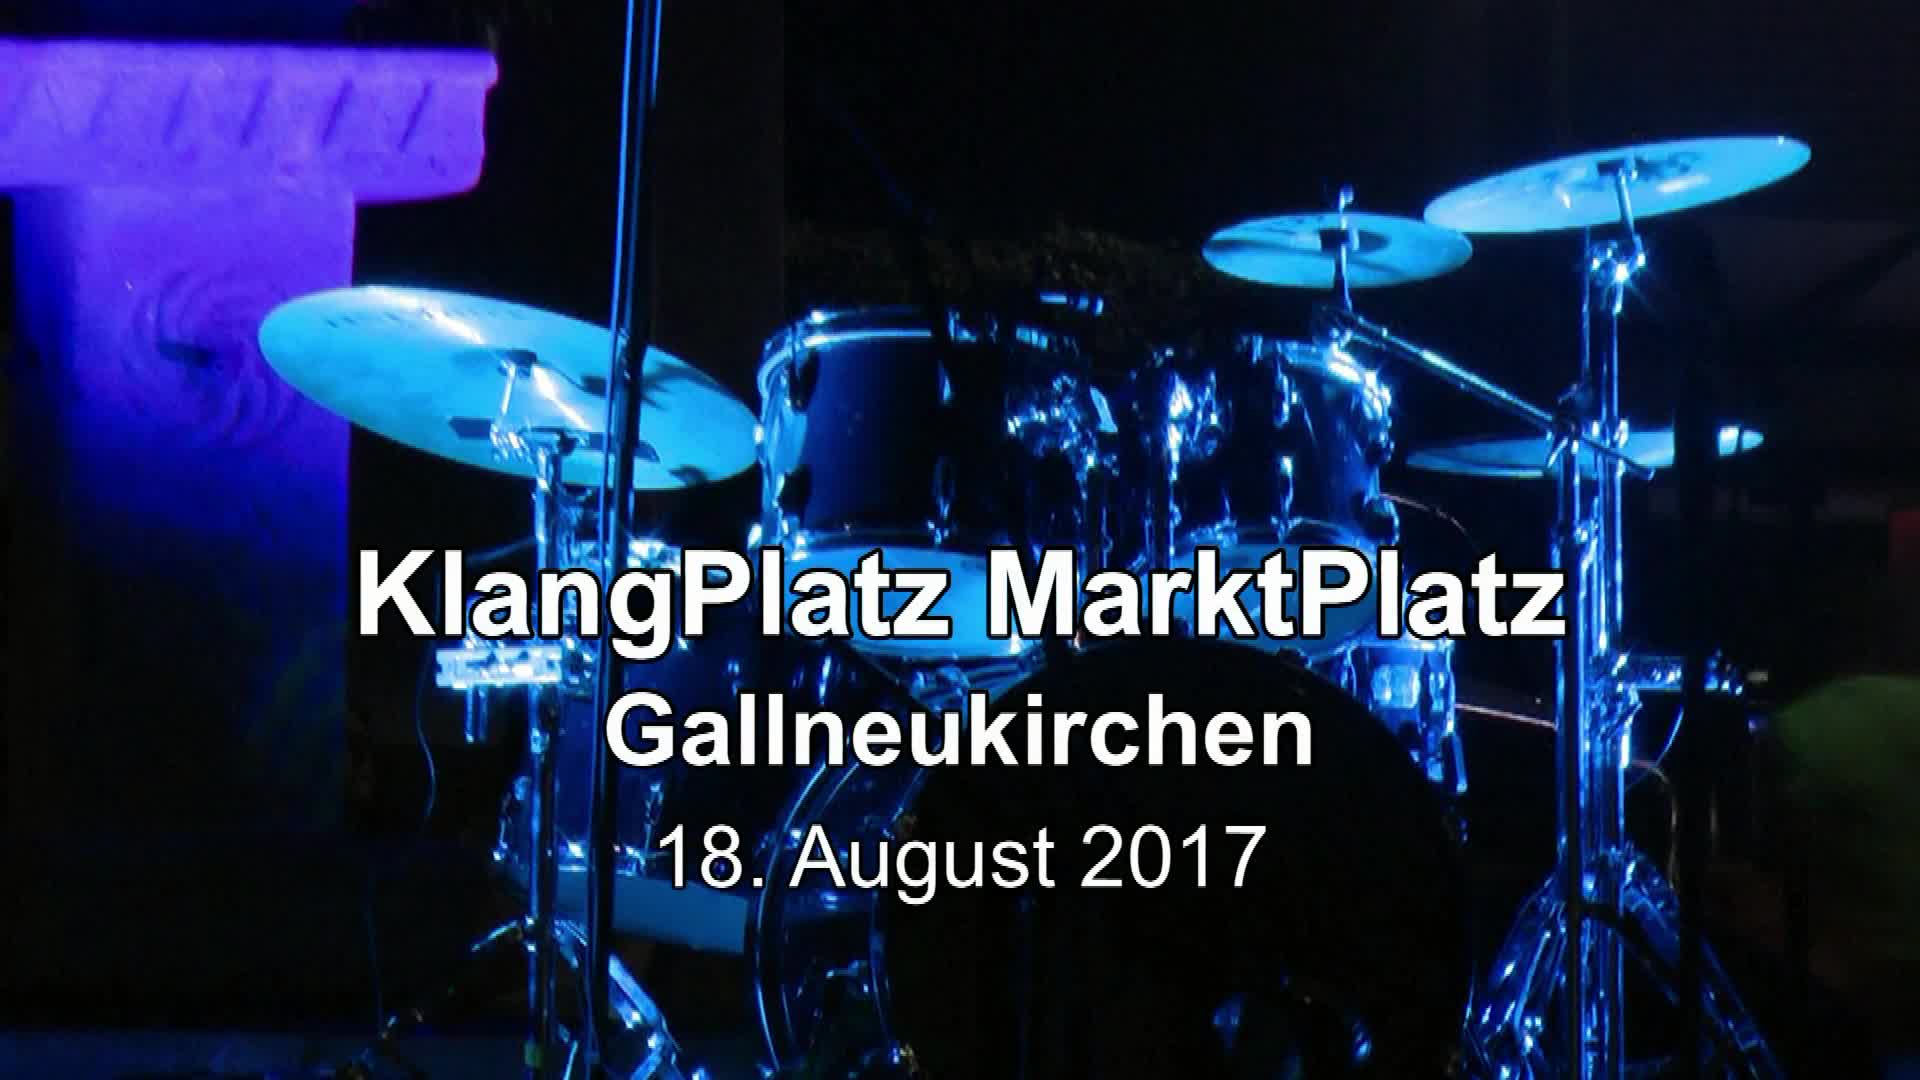 KlangPlatz MarktPlatz Gallneukirchen, August 2017